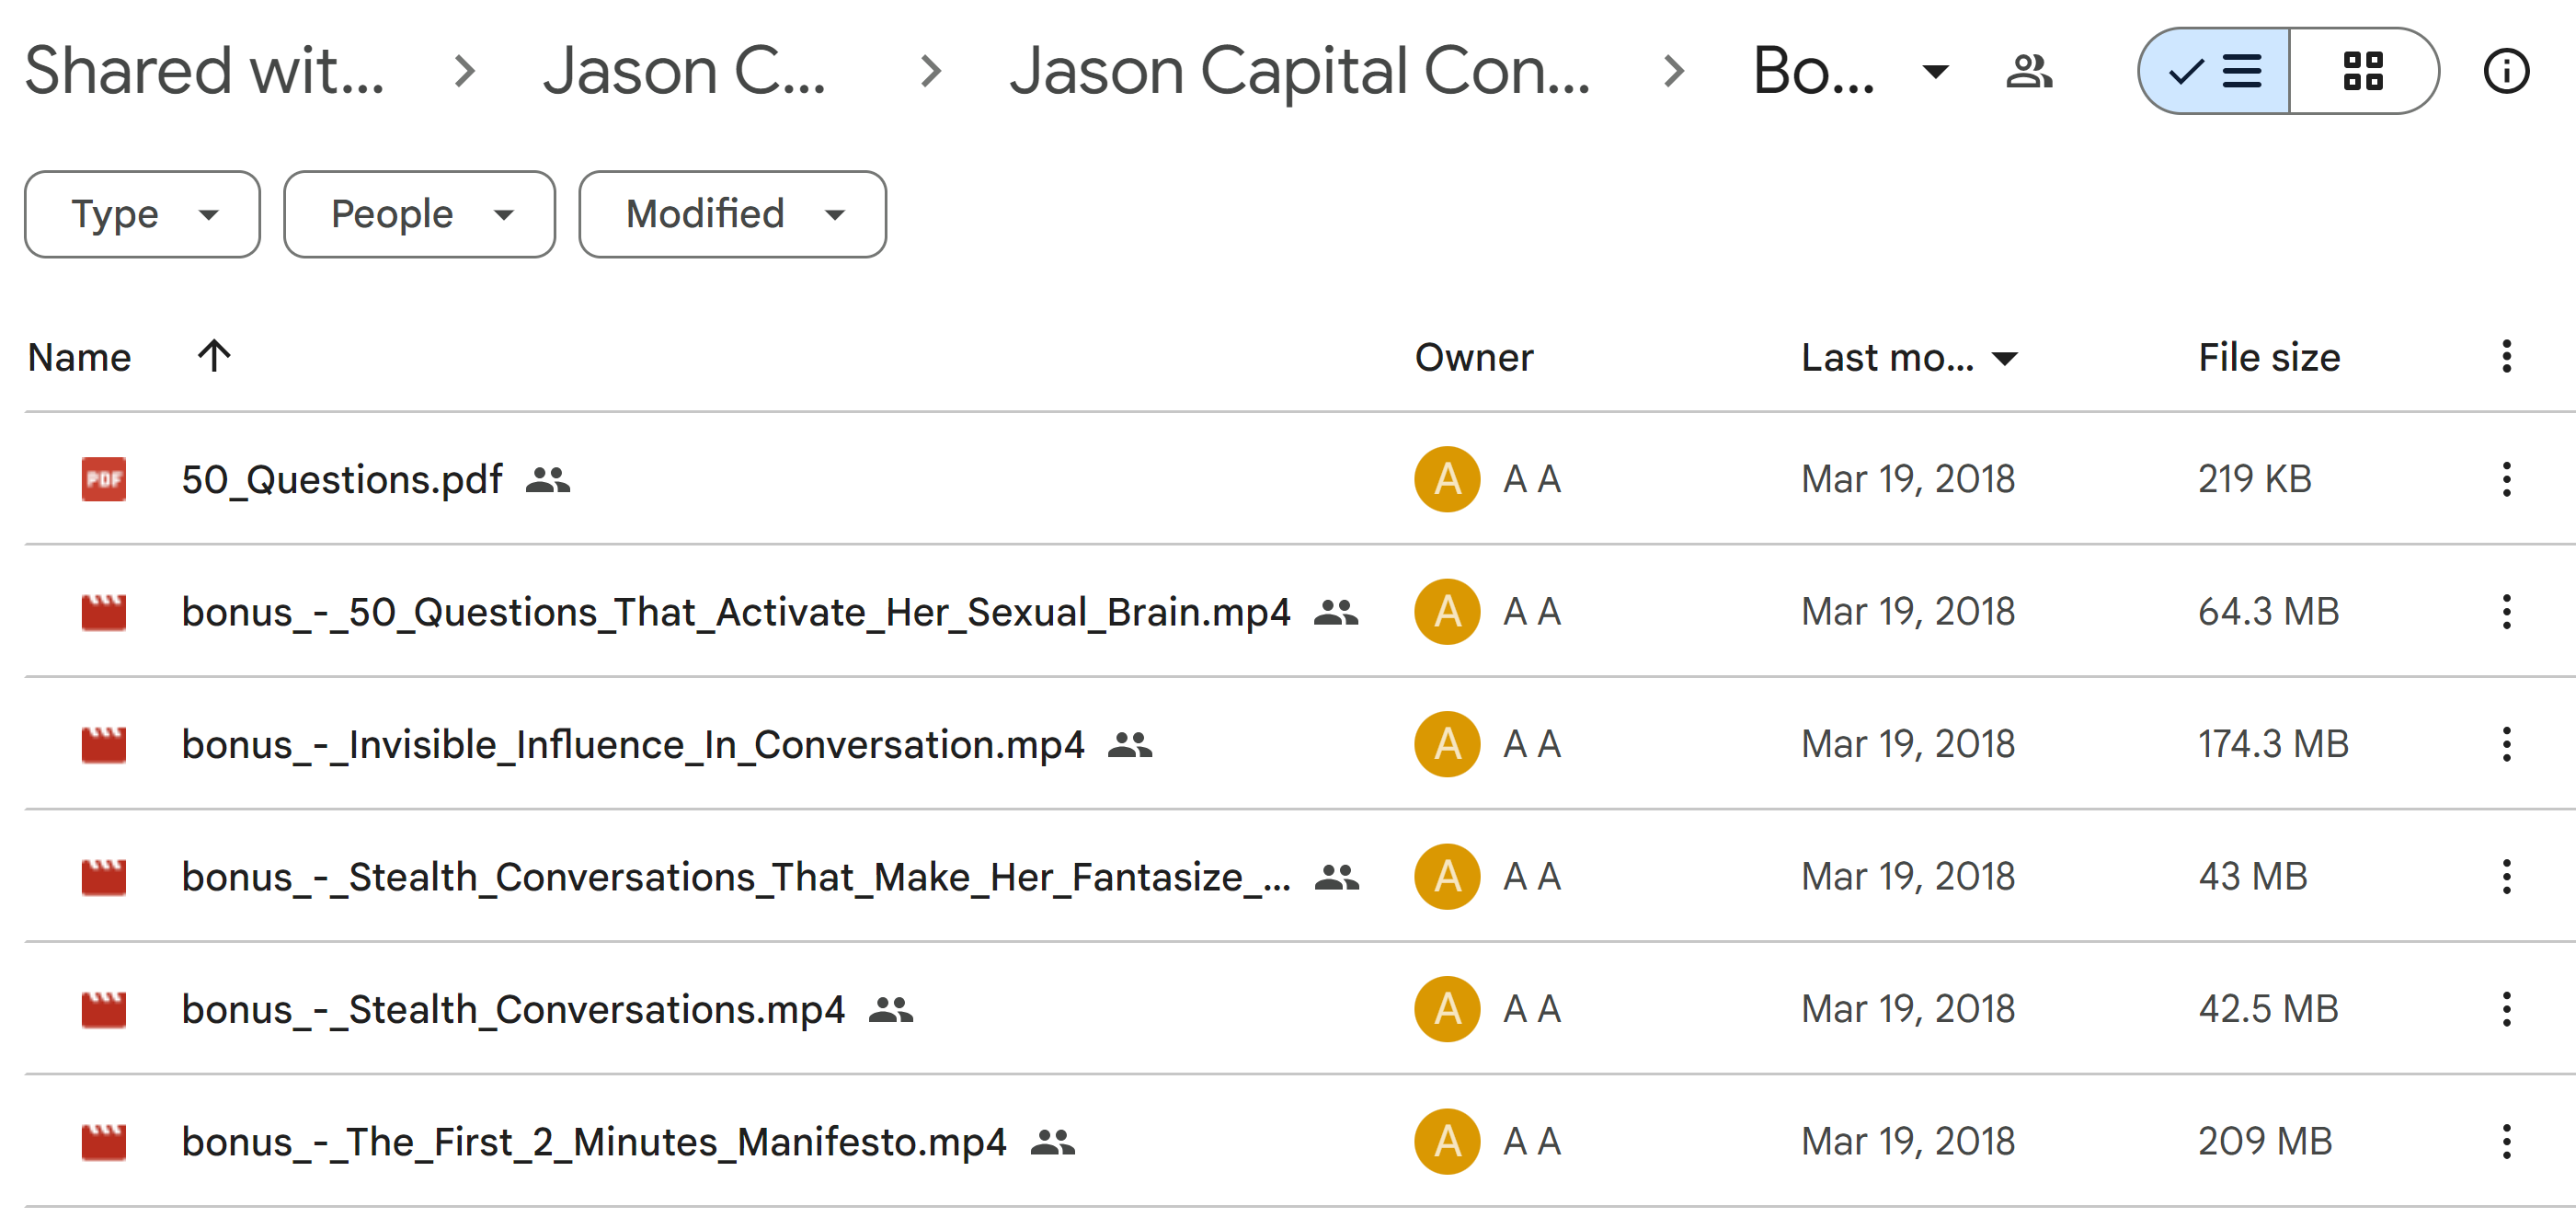 Jason Capital Conversation God Course